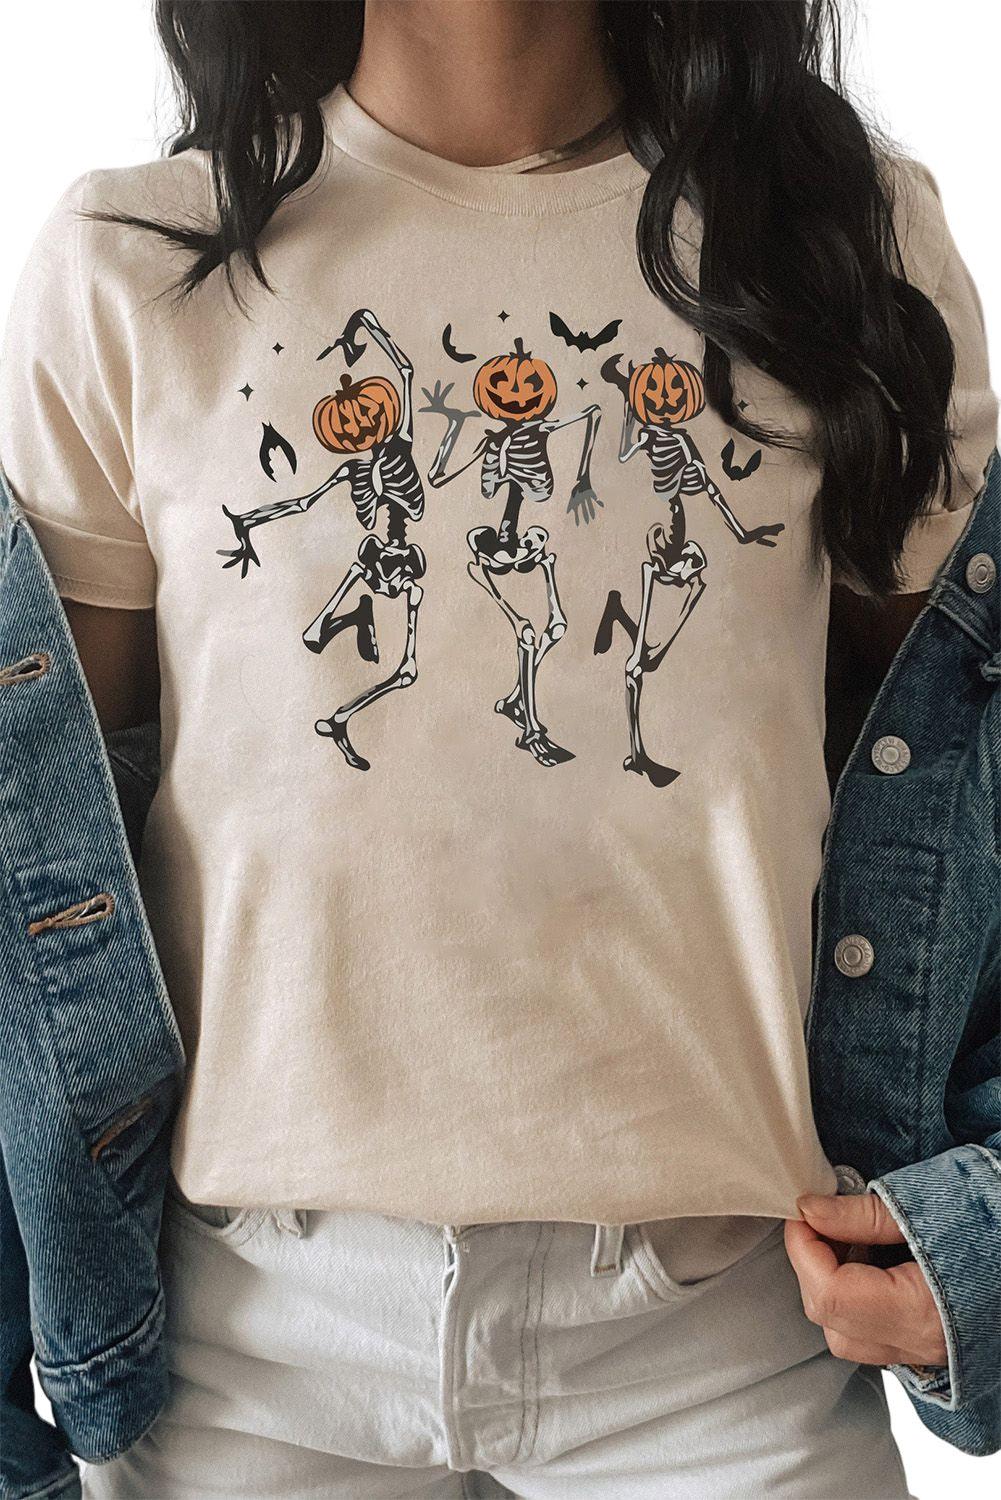 Howdy Fall Cow Pumpkin Print Graphic T Shirt - L & M Kee, LLC